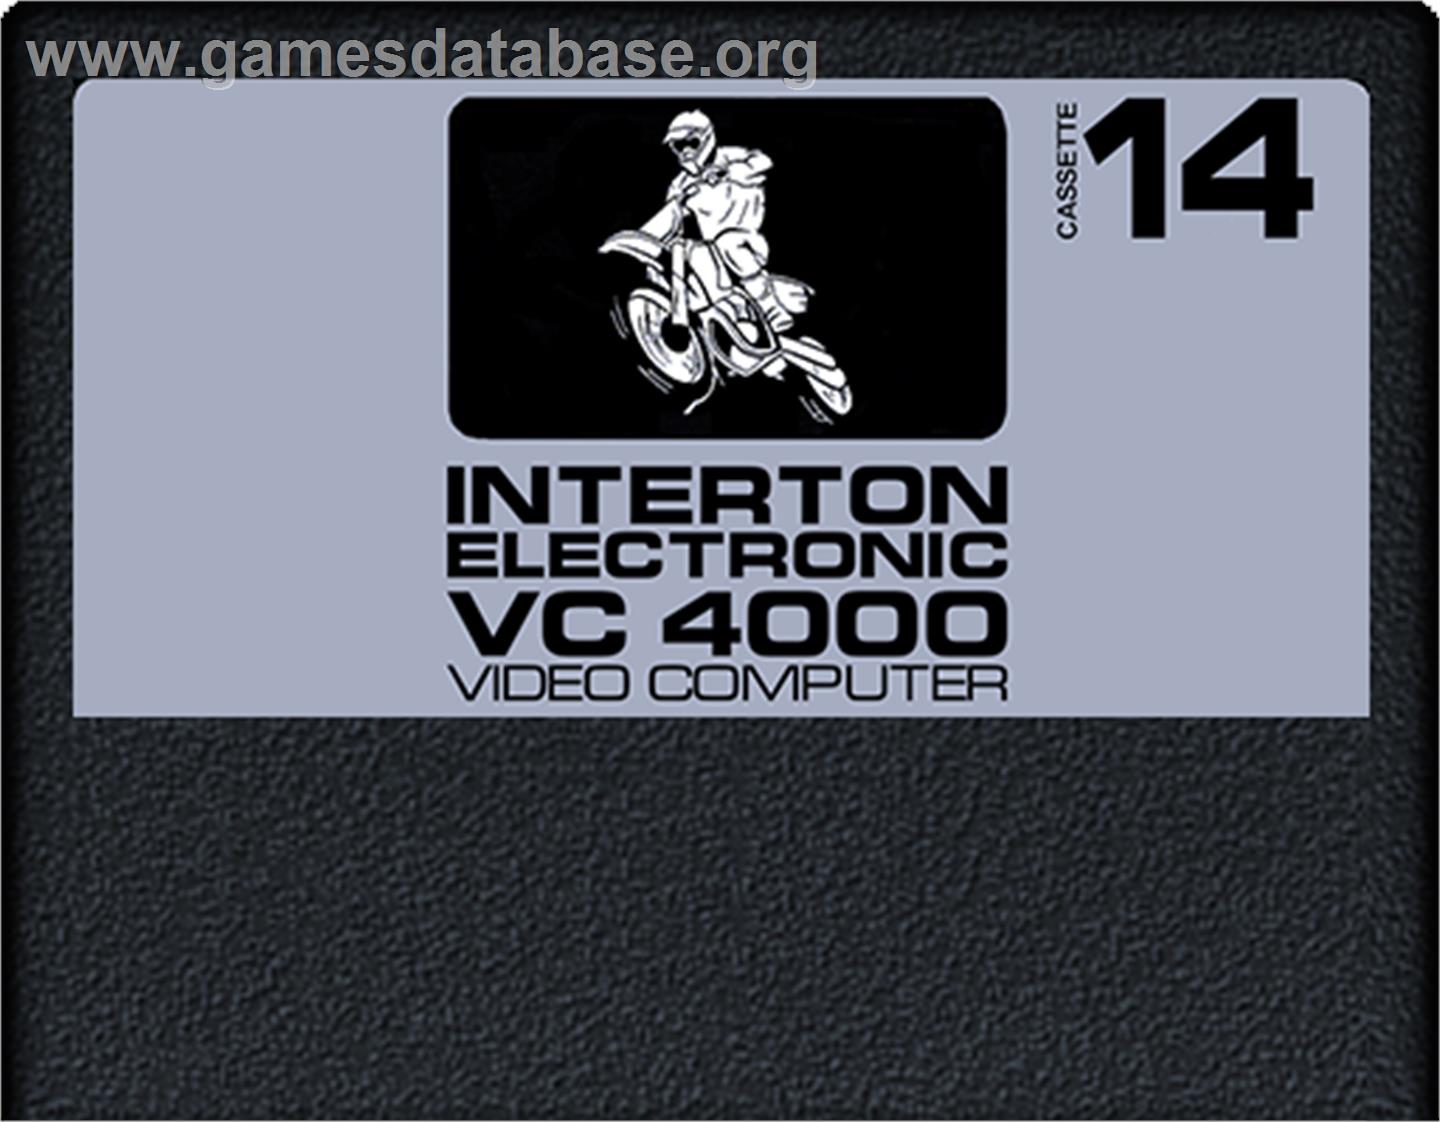 Motocross - Interton VC 4000 - Artwork - Cartridge